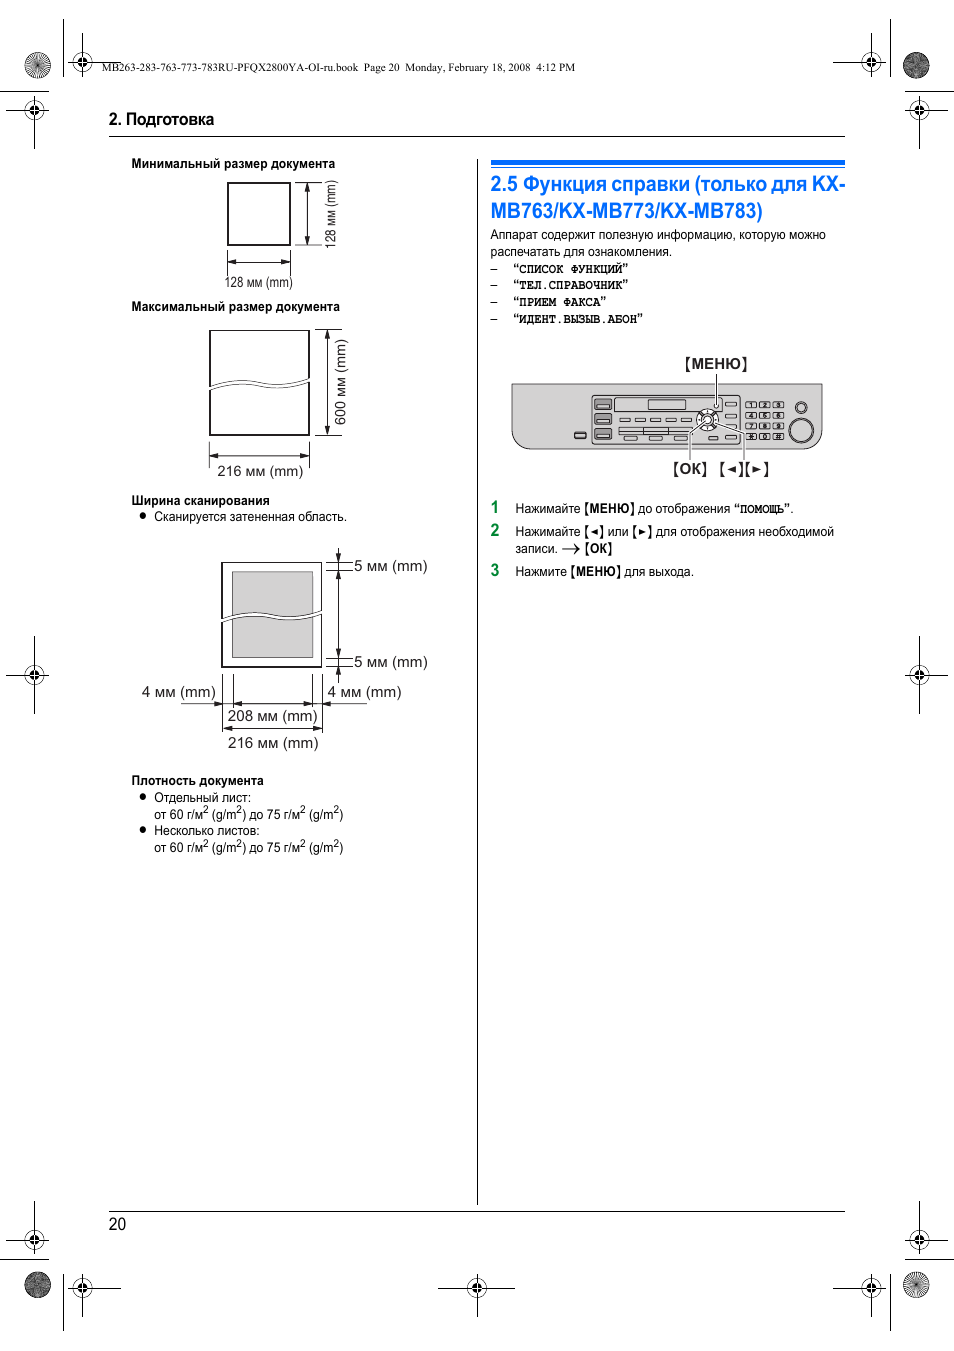 Справка, Подготовка 20 | Инструкция по эксплуатации Panasonic KX-MB283 | Страница 20 / 104